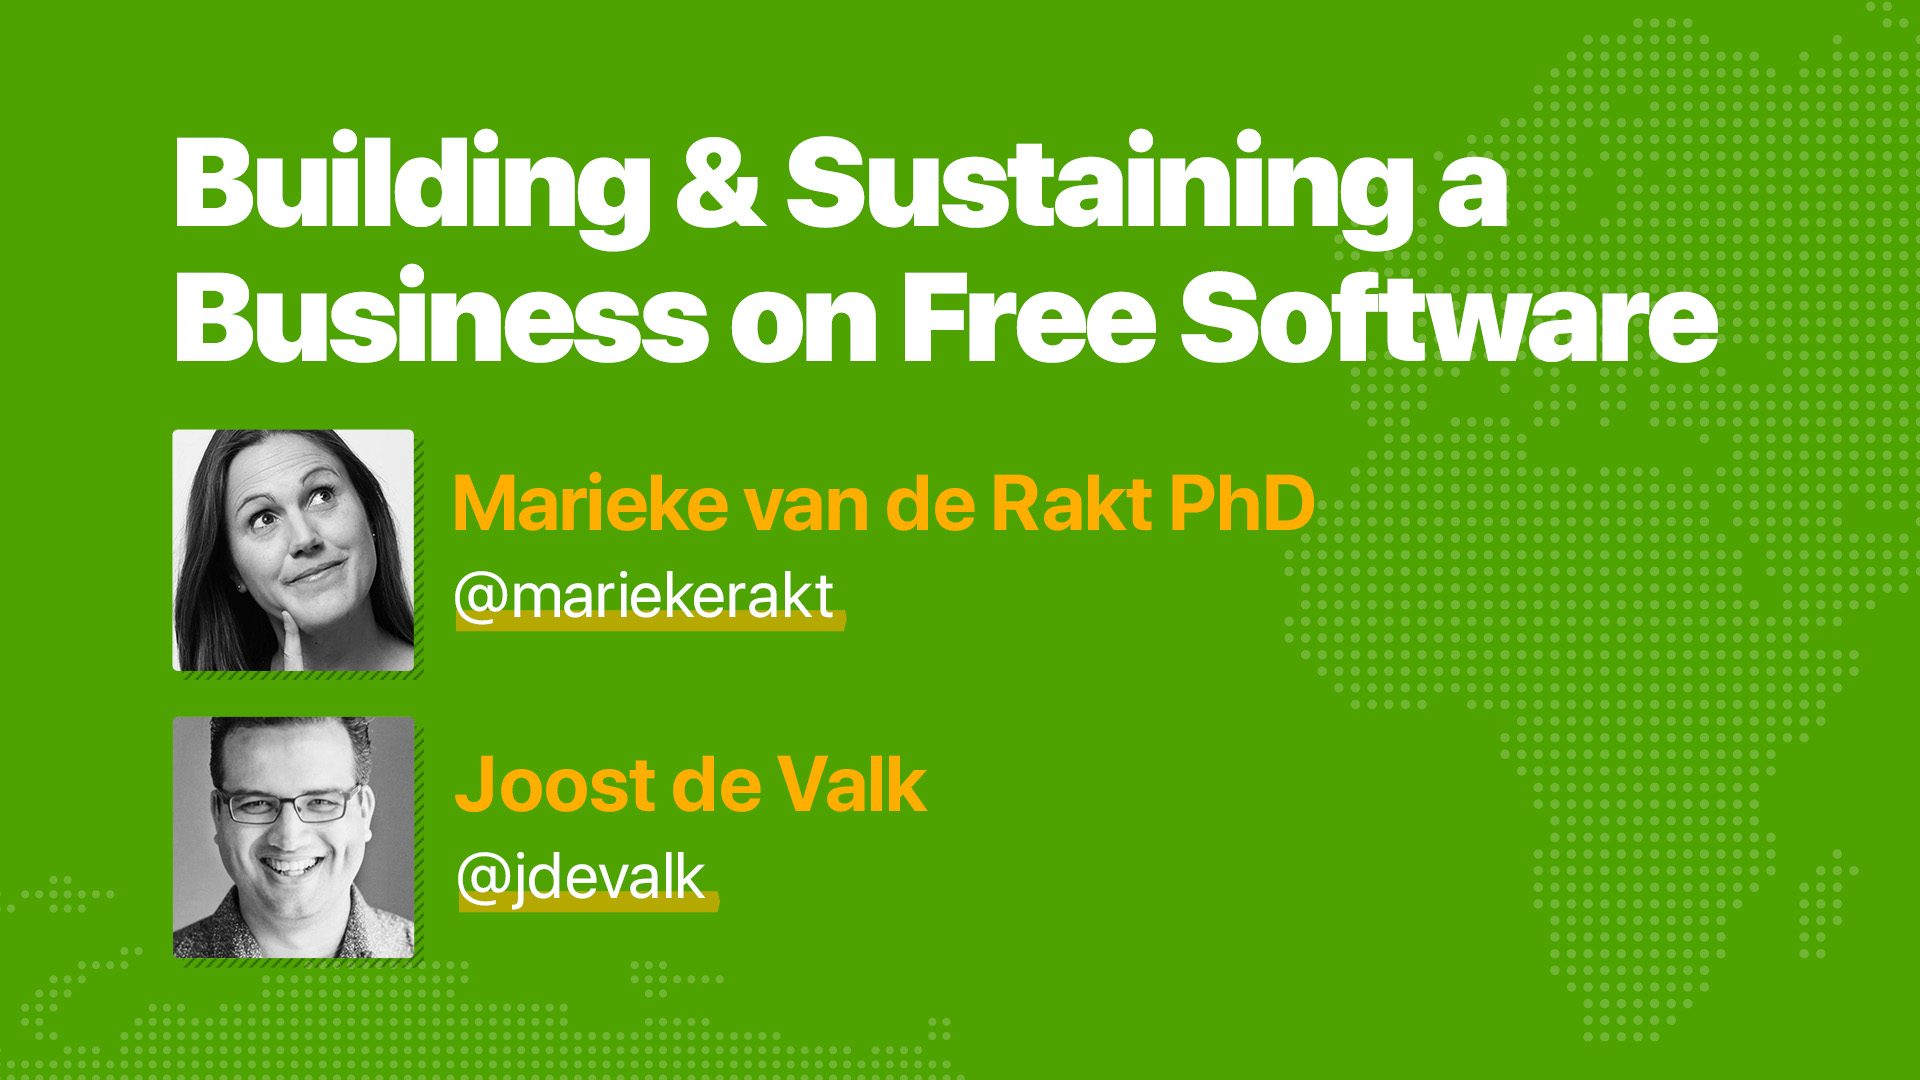 Building and Sustaining a Business on Free Software - Marieke van de Rakt PhD & Joost de Valk